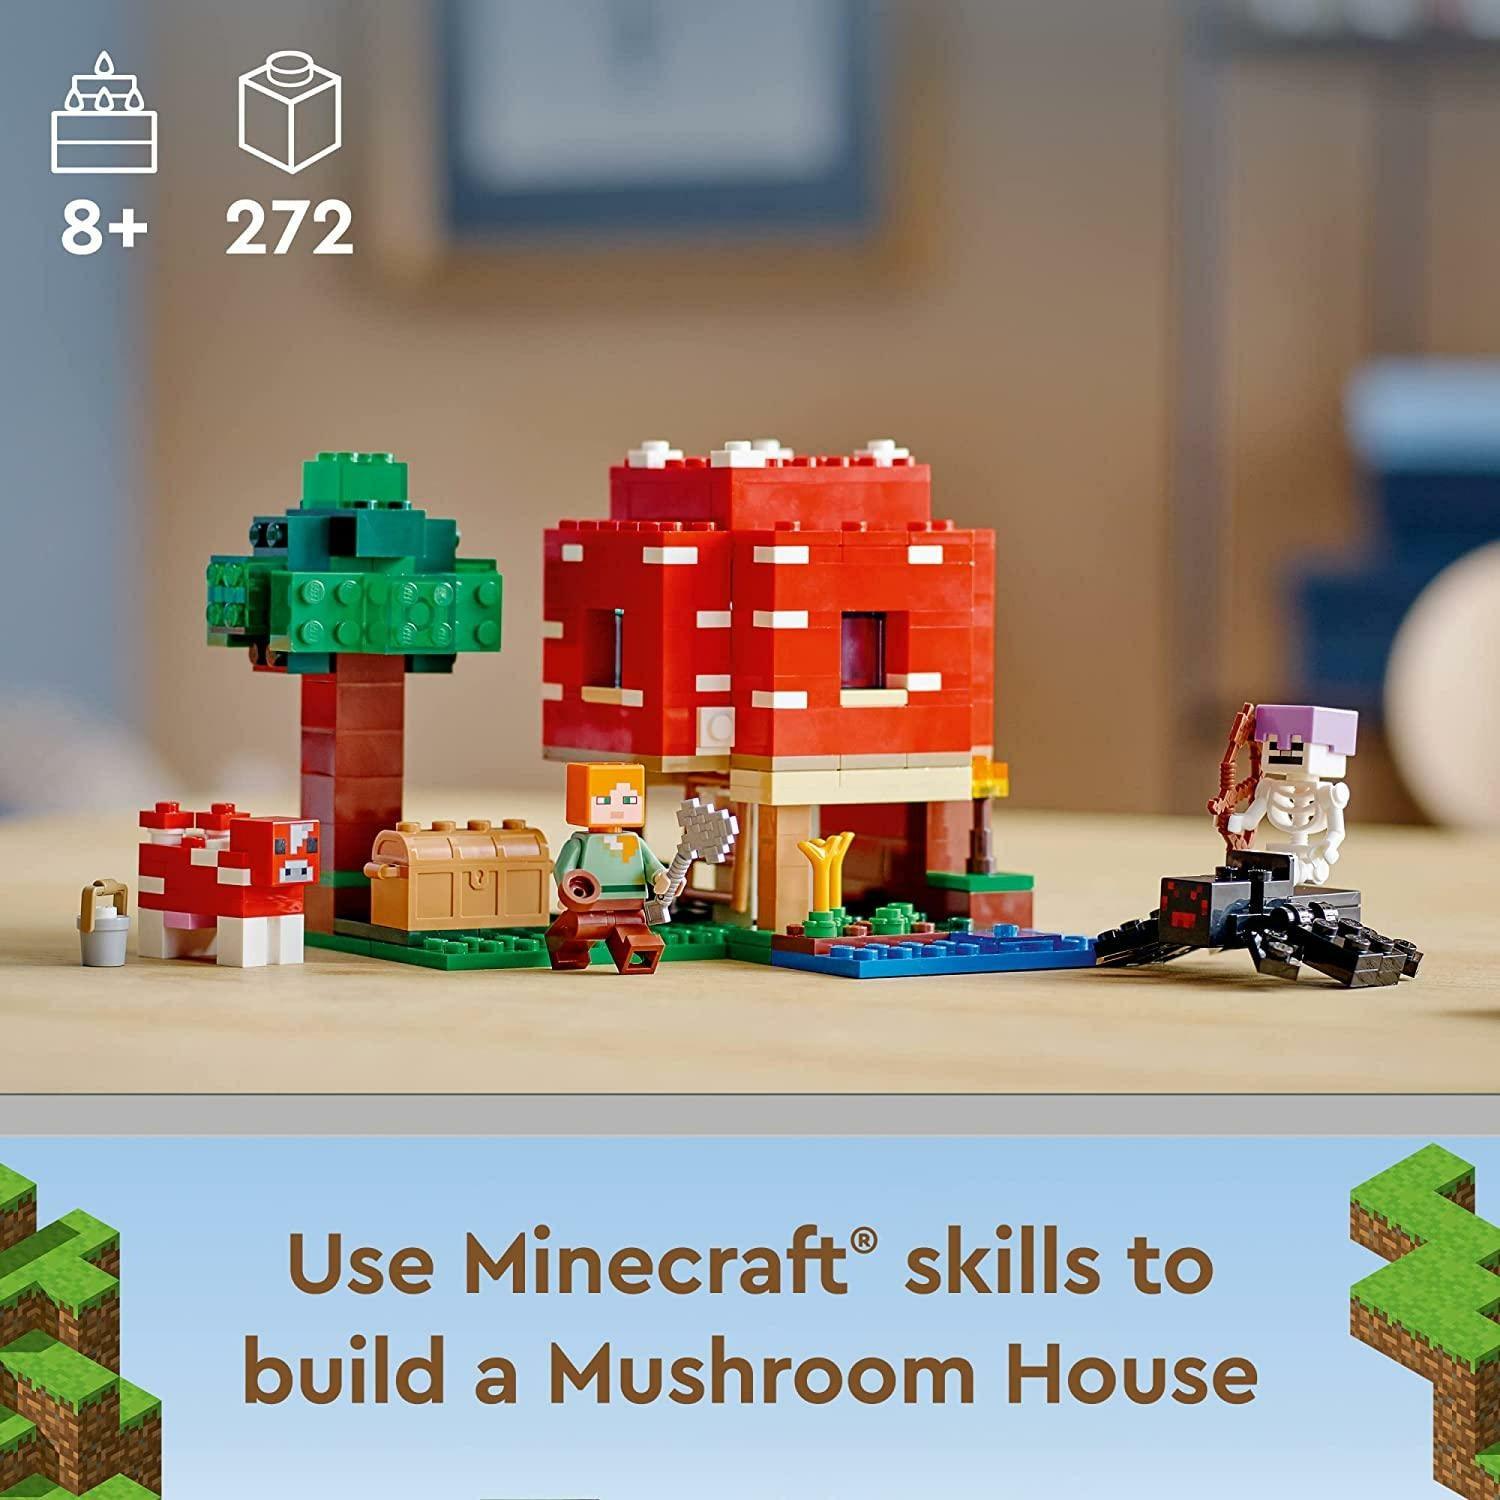 LEGO Minecraft The Mushroom House 21179 House Playset (272 Pieces) - BumbleToys - 5-7 Years, Animals, Boys, LEGO, Minecraft, OXE, Pre-Order